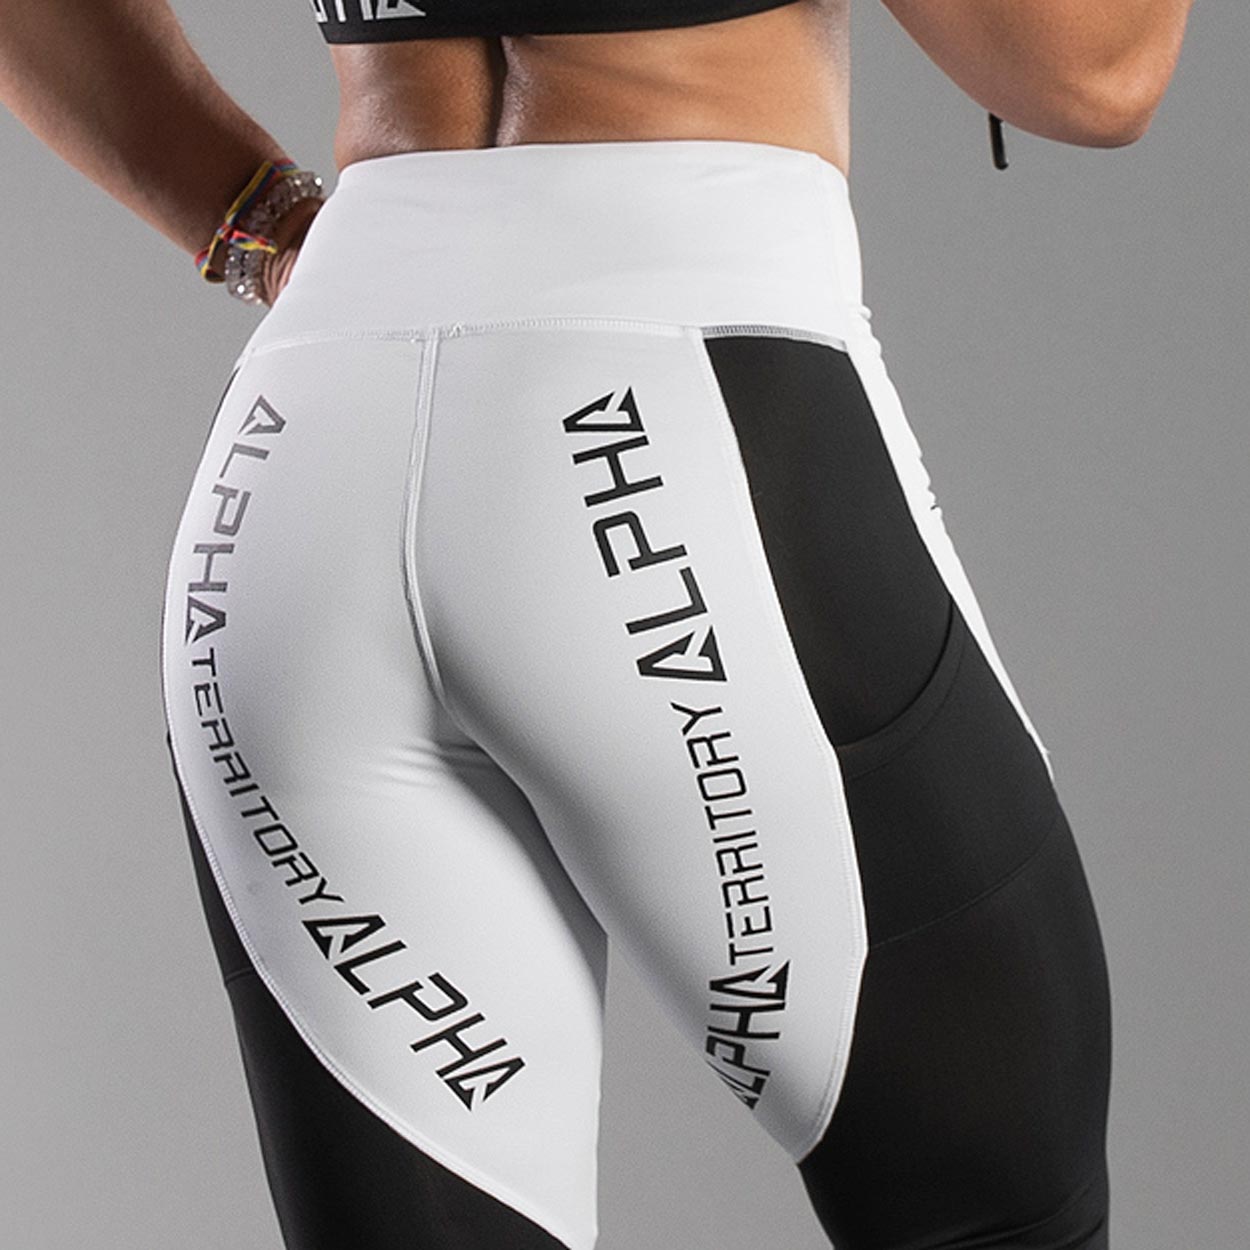 2021 Alphalete revival leggings Never worn, they - Depop